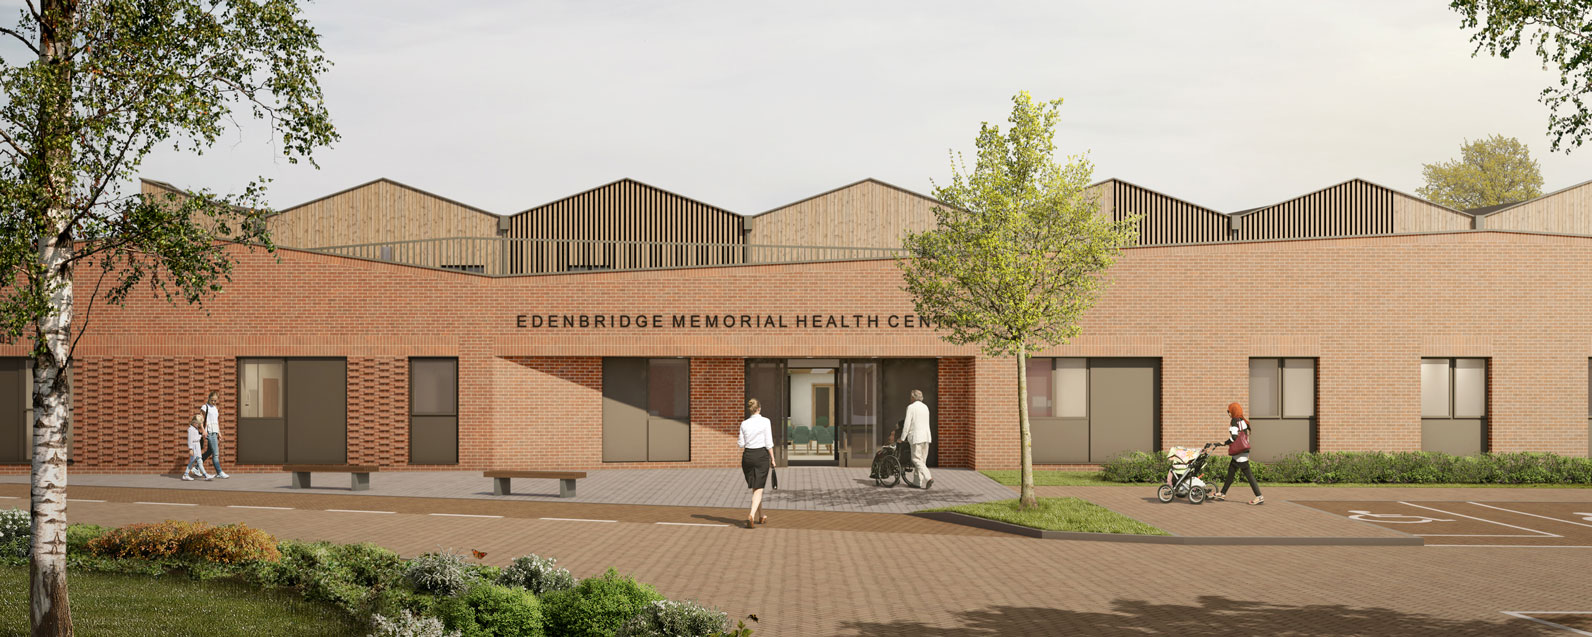 LSI-Architects-Edenbridge-Memorial-Health-Centre